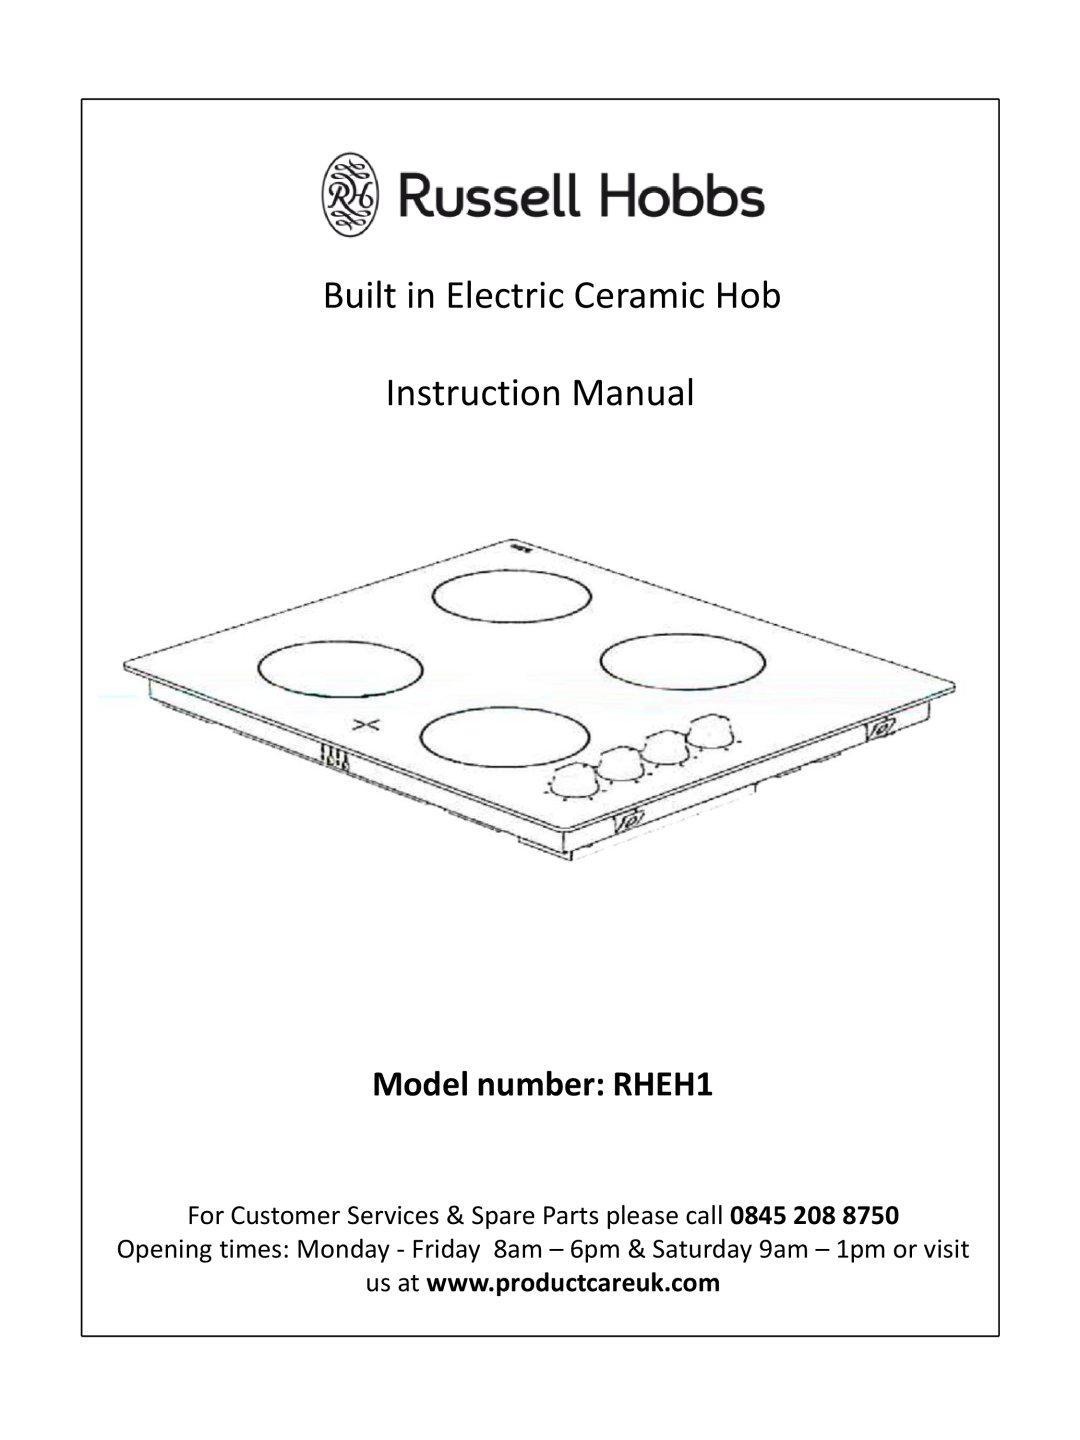 Russell Hobbs instruction manual Model number RHEH1 